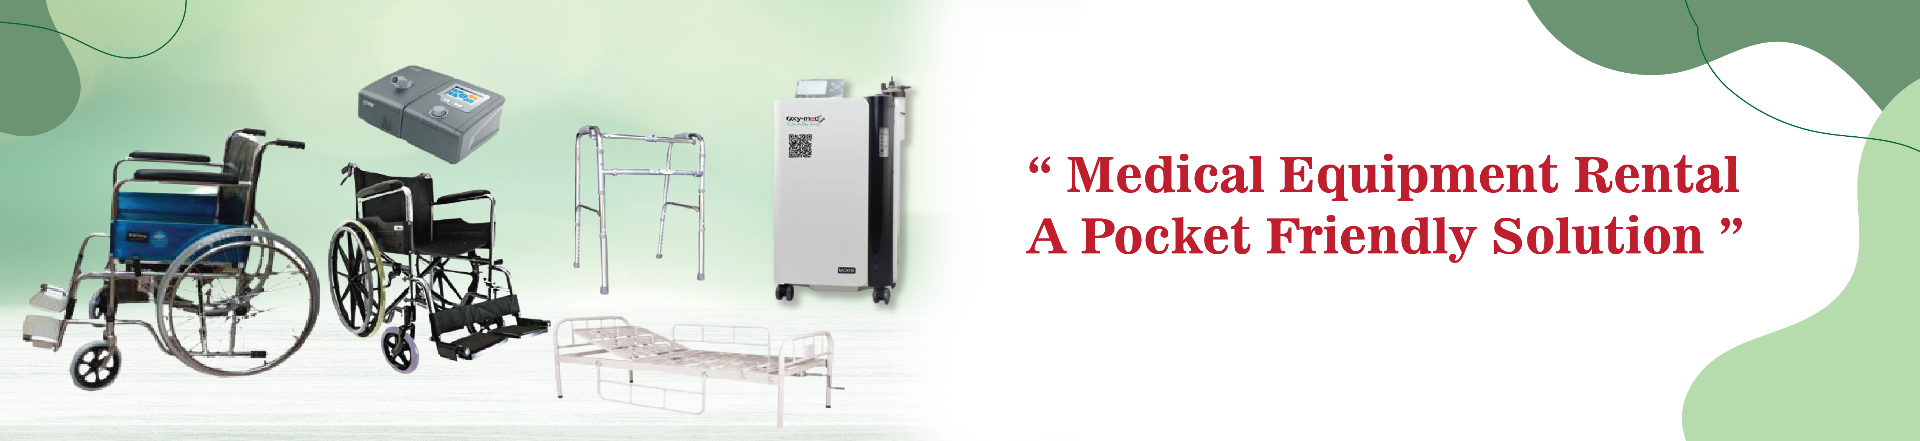 Medical Equipment Rental – A Pocket Friendly Solution